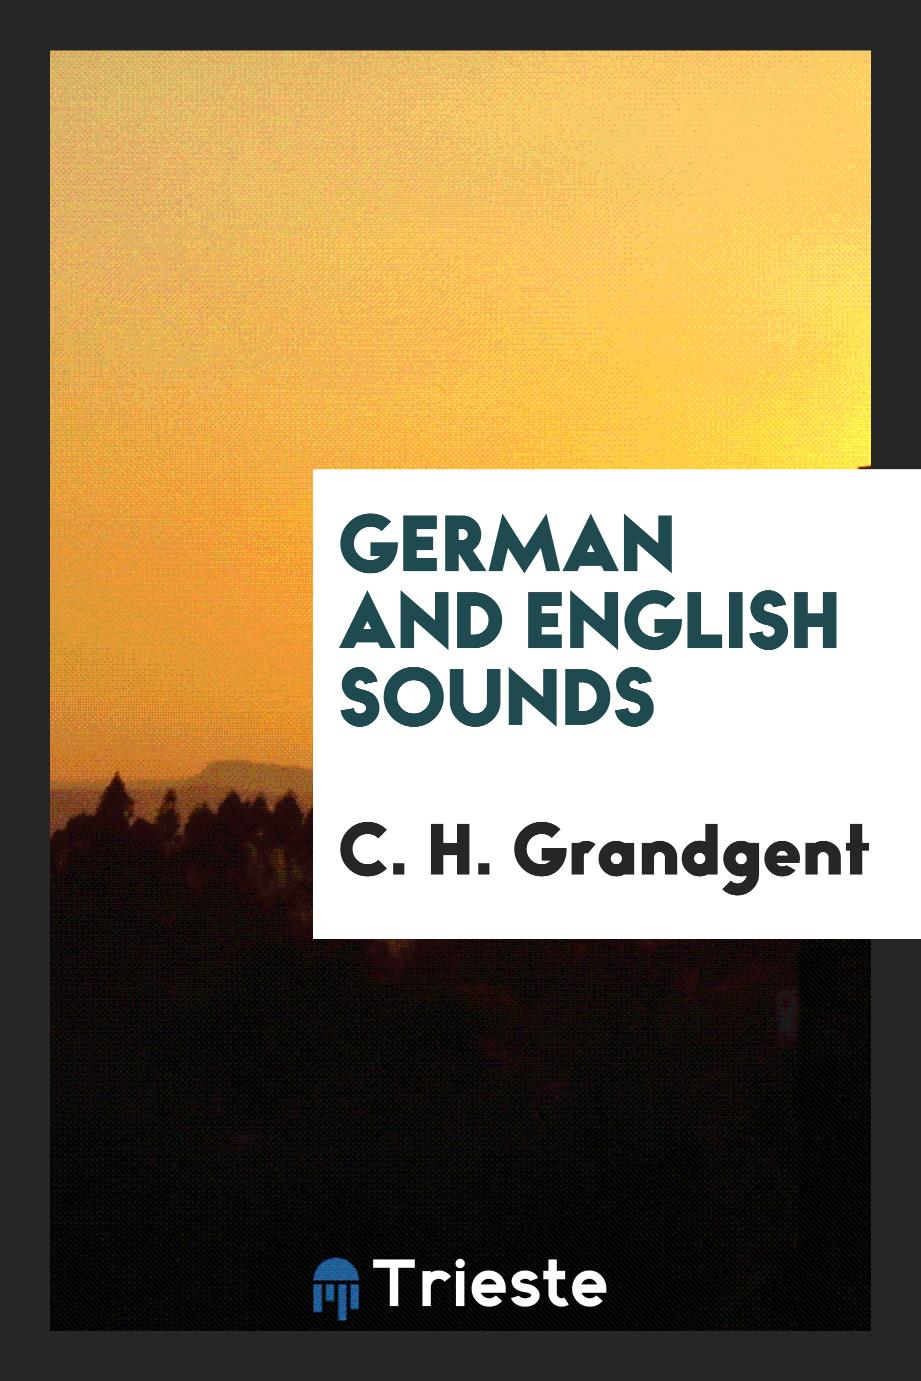 German and English sounds